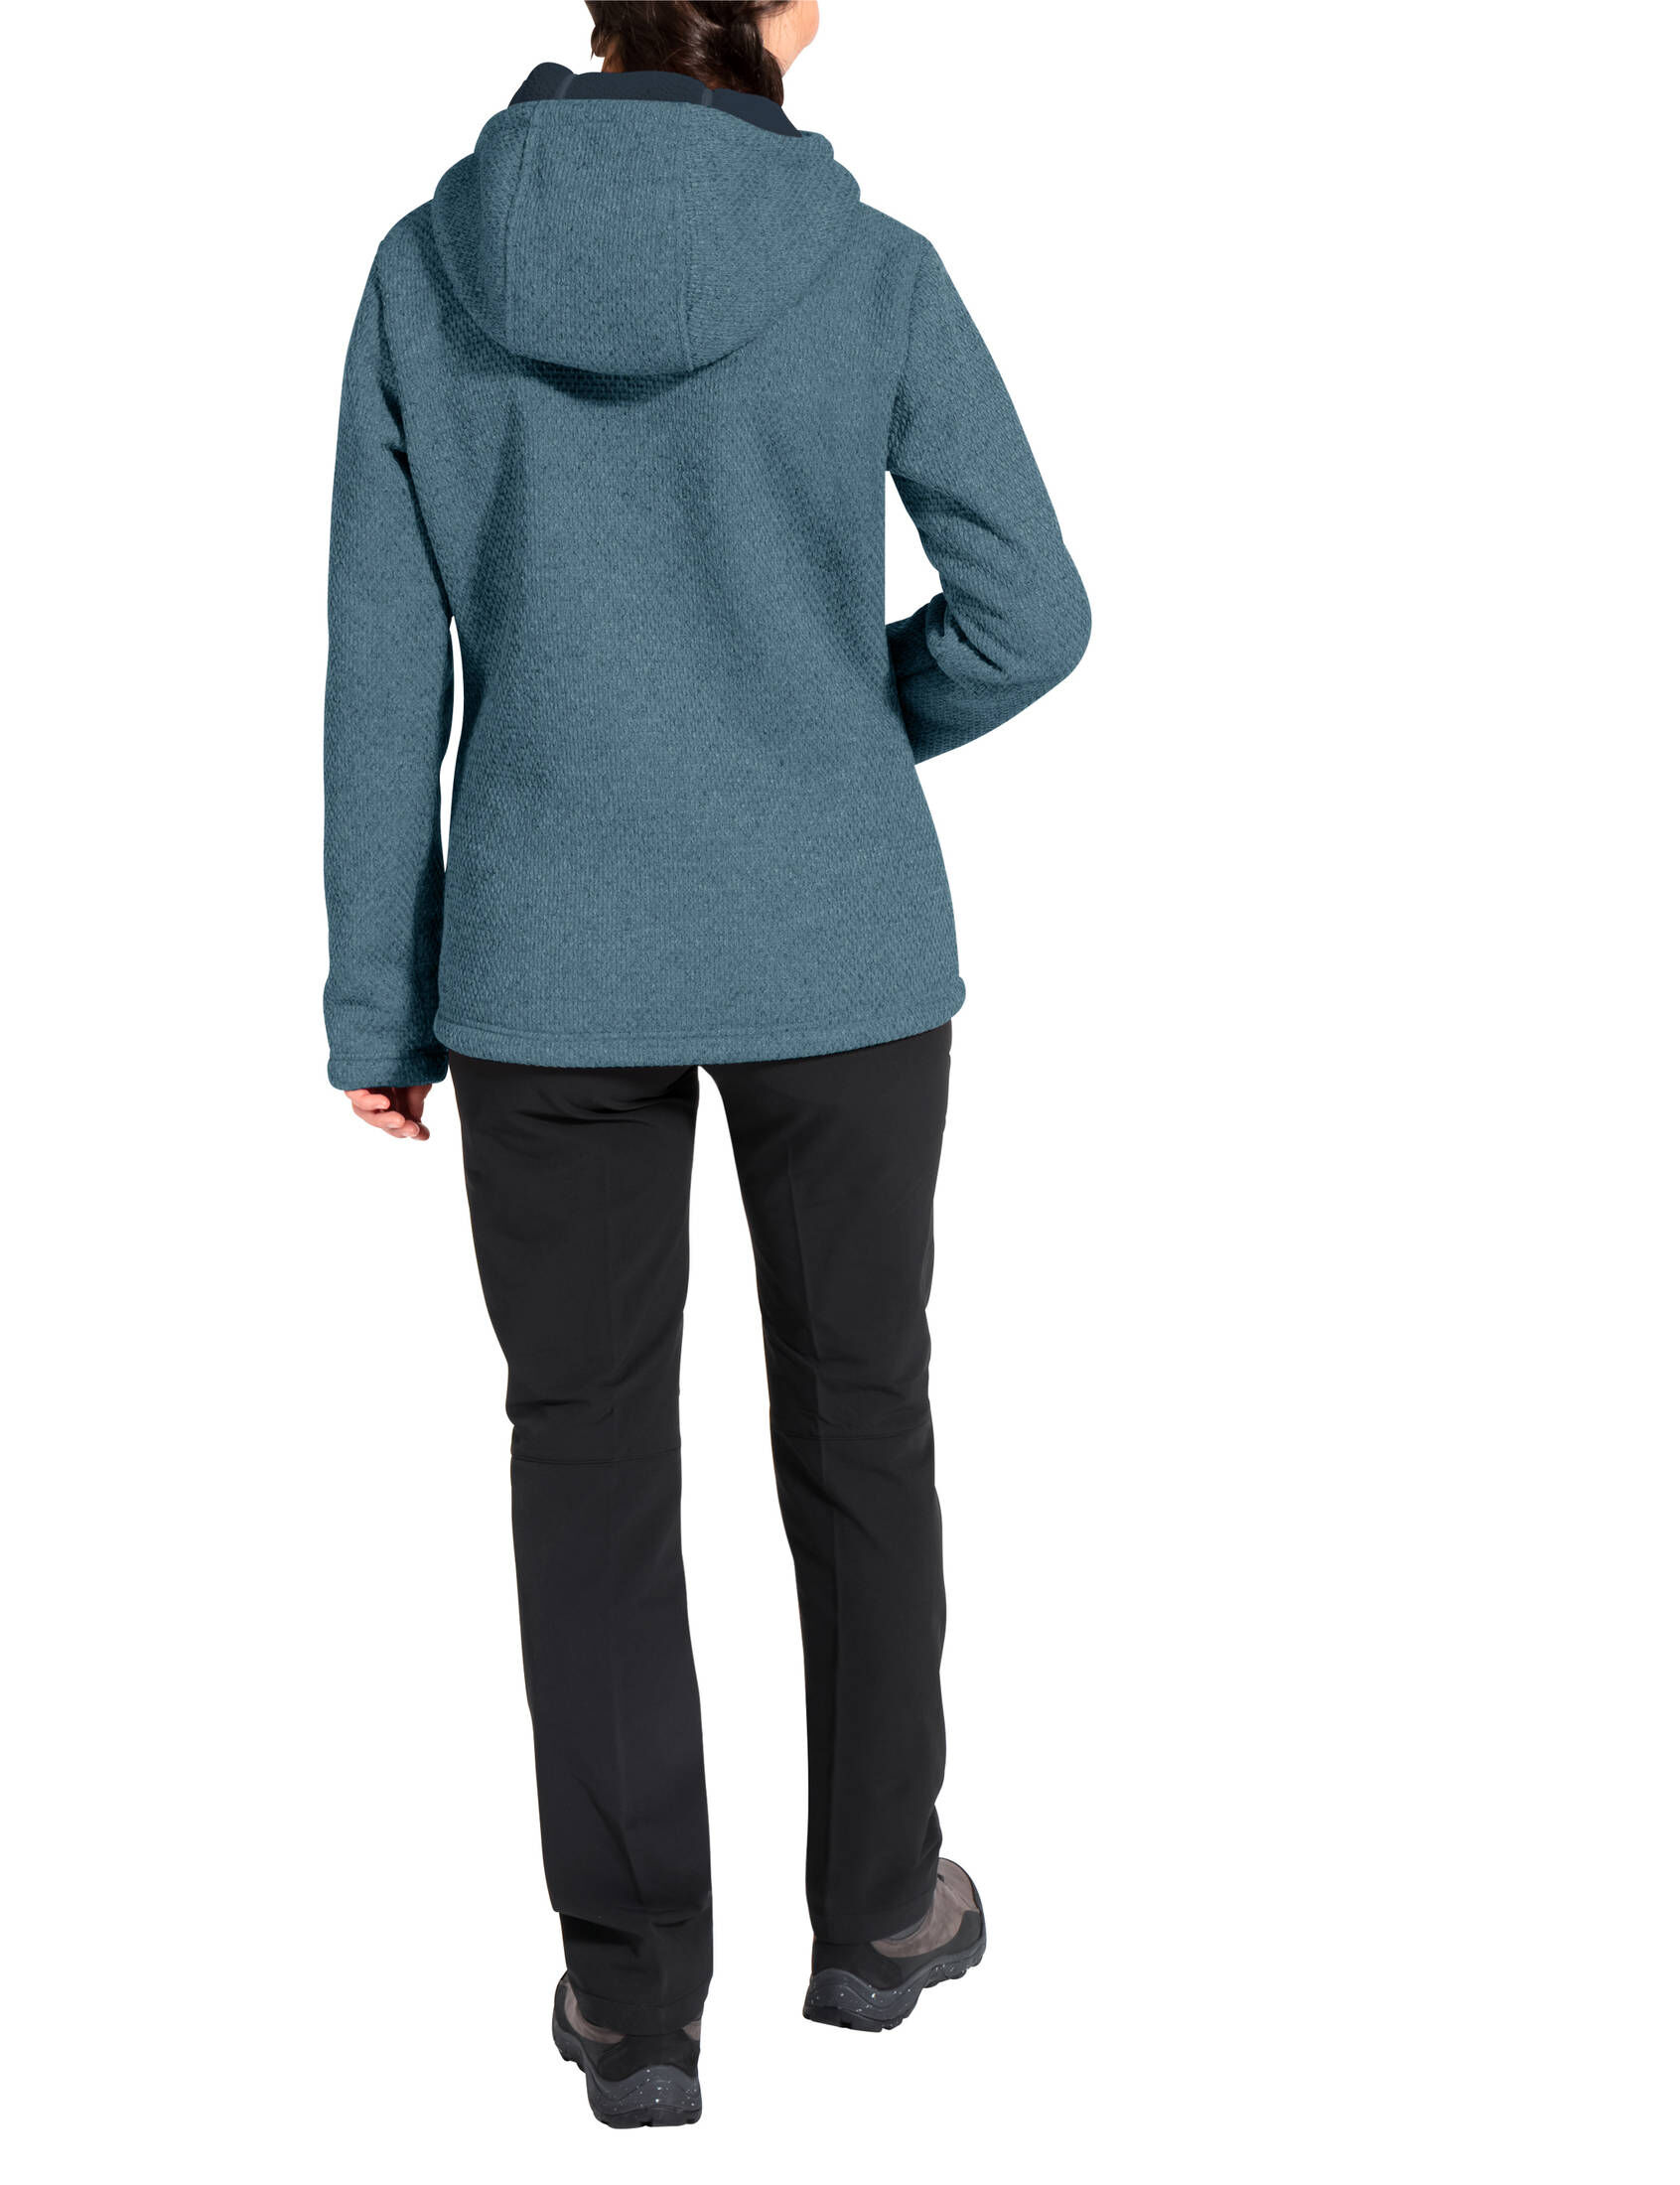 VAUDE Damen Jacke Women's Skomer Hooded kaufen | engelhorn